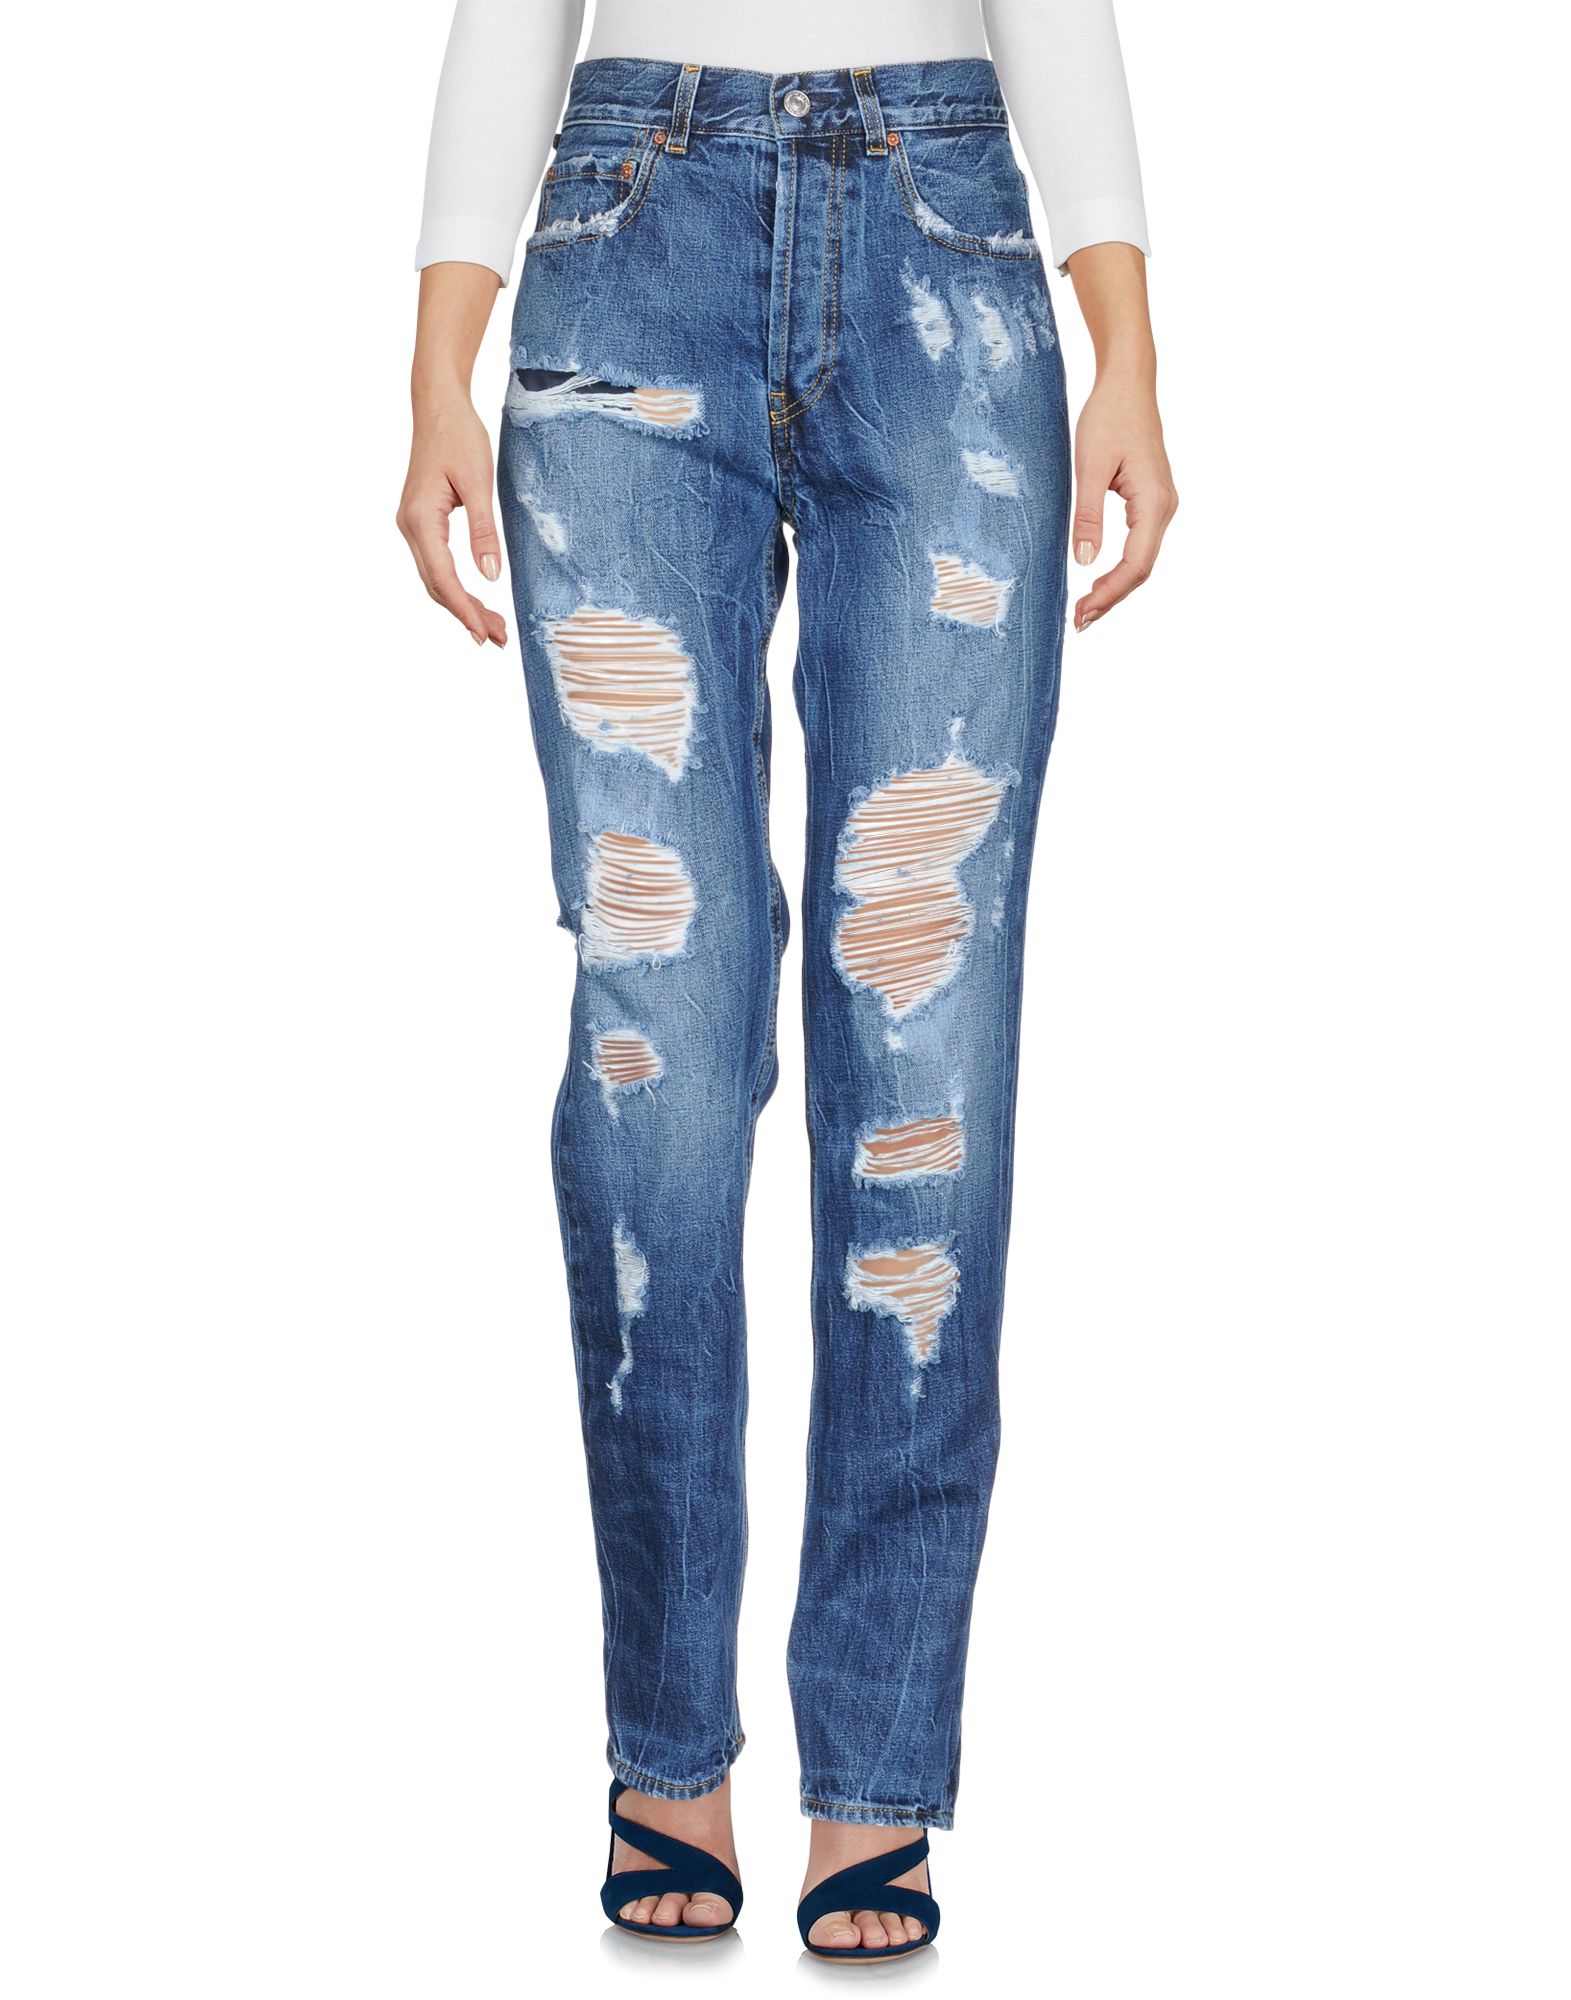 ACYNETIC Jeans,42683893UC 4